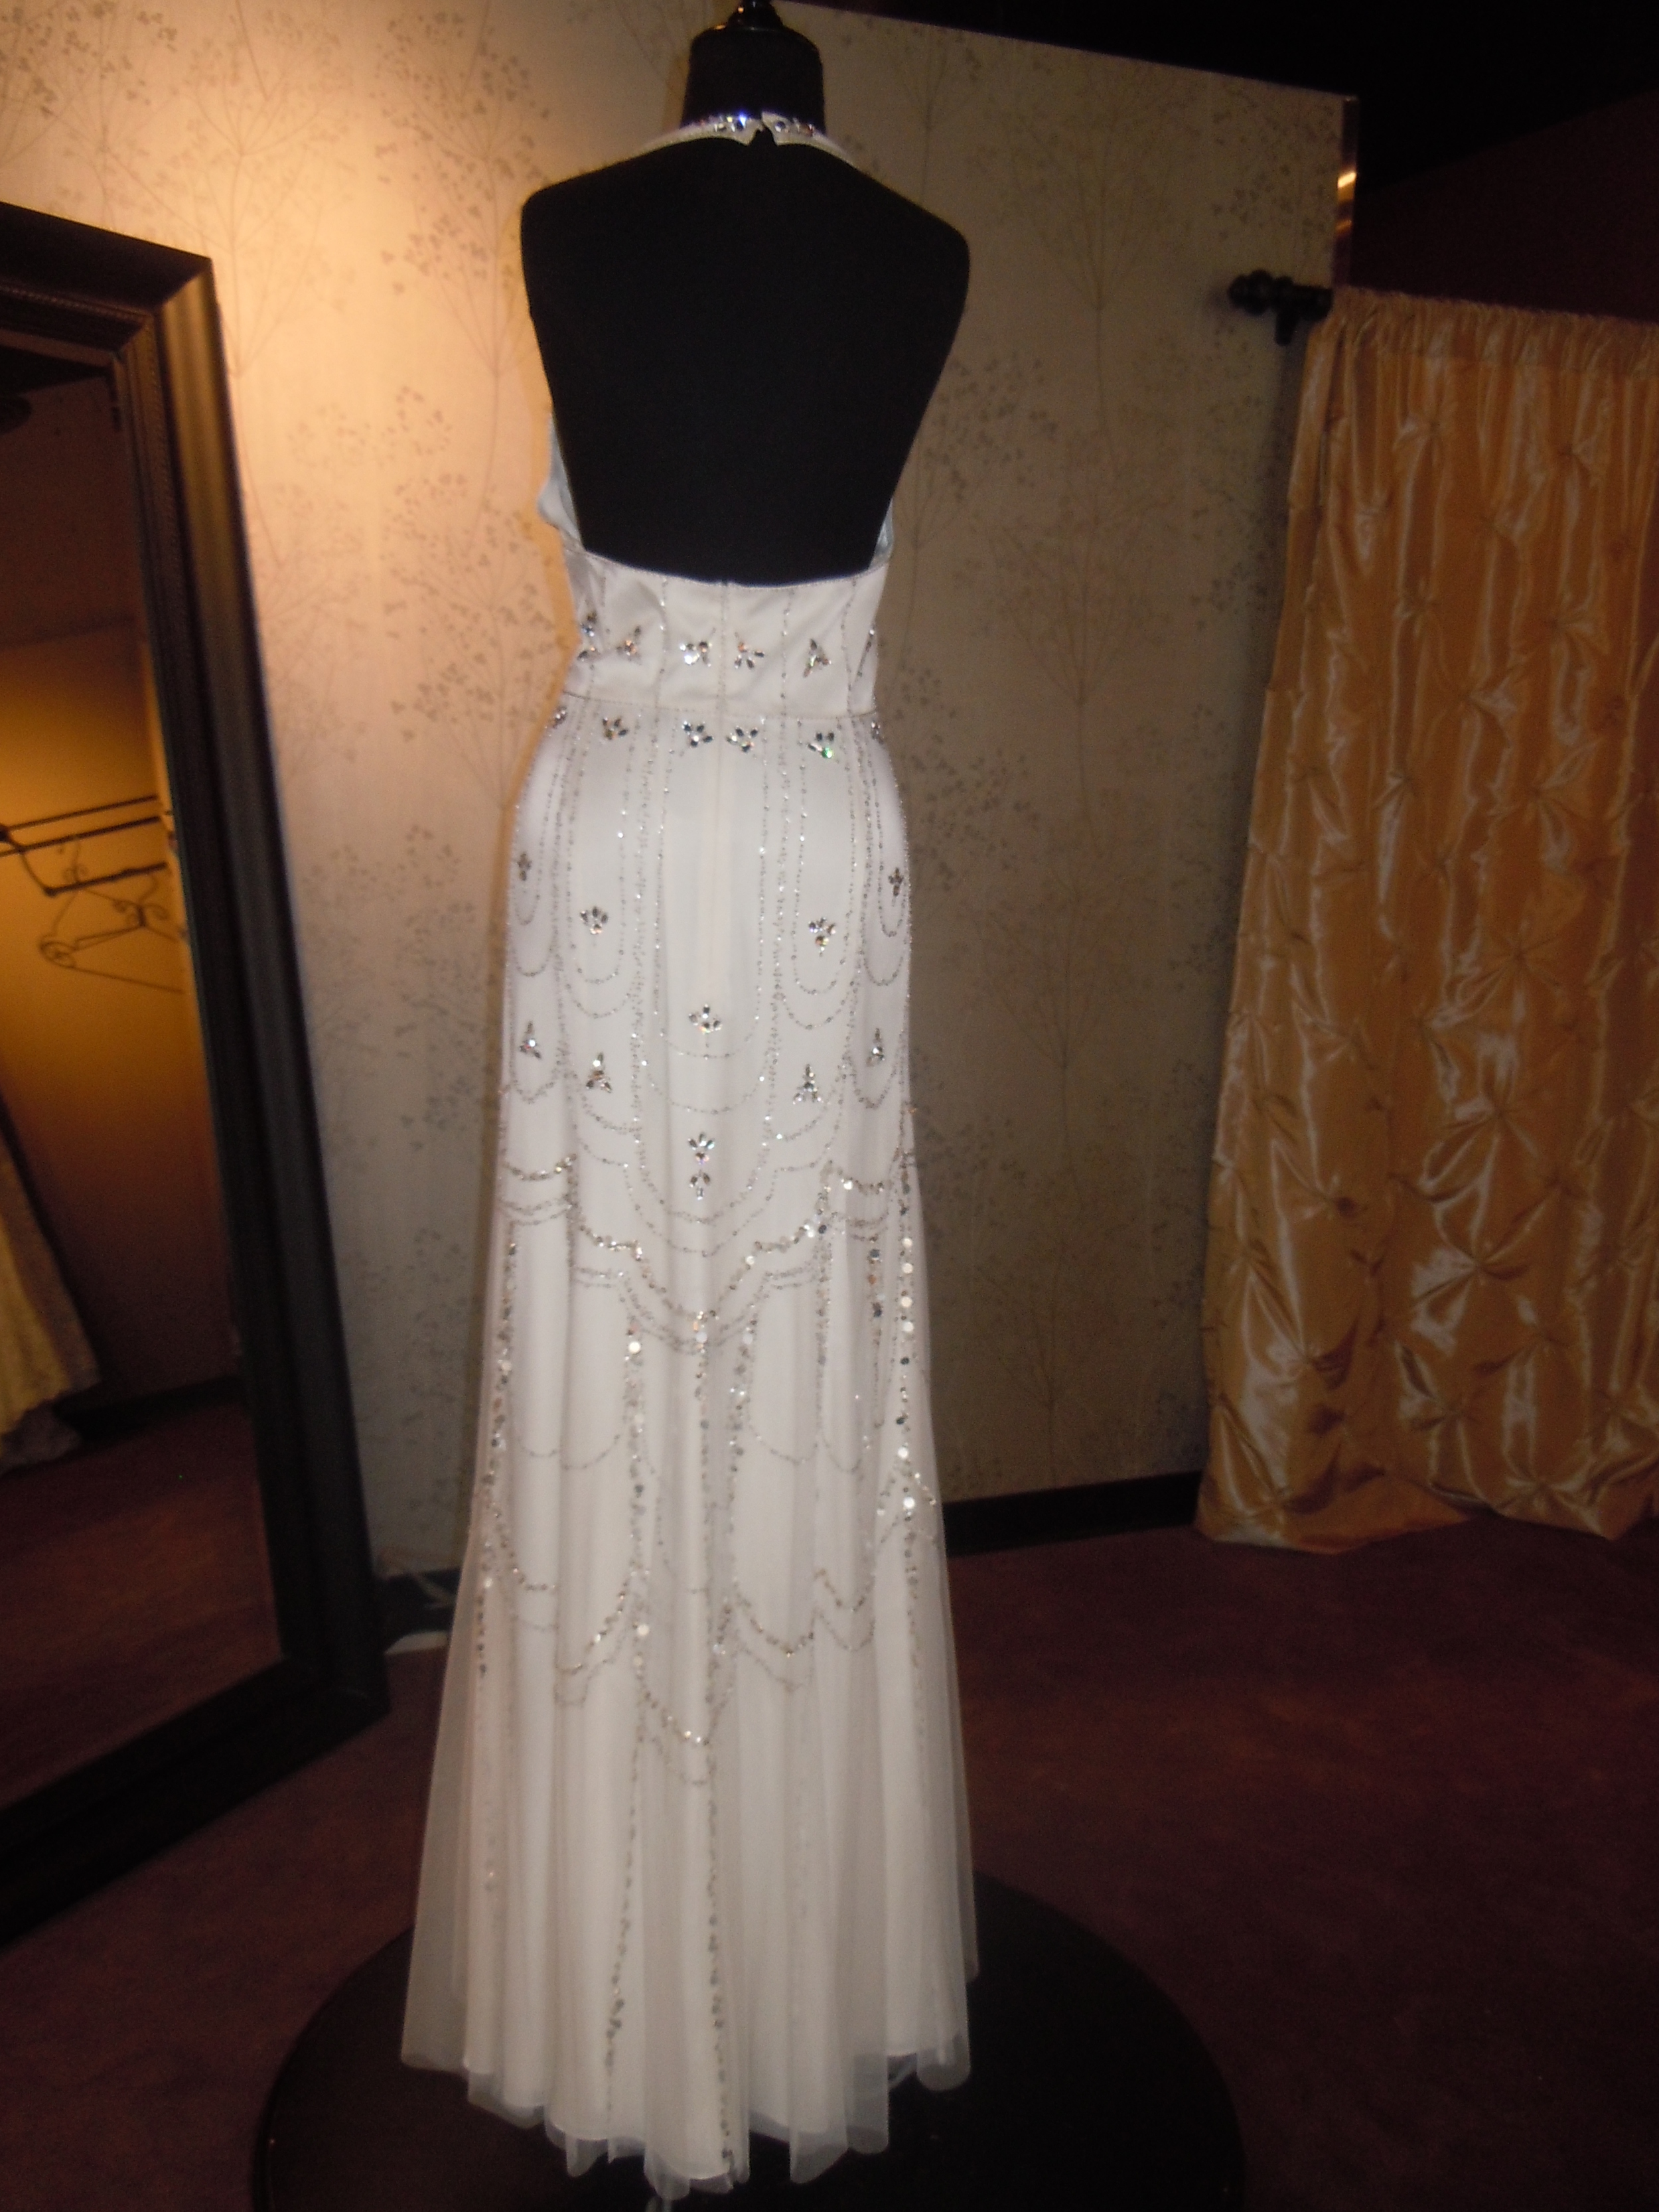 Jenny Packham "Luna" wedding dress - back